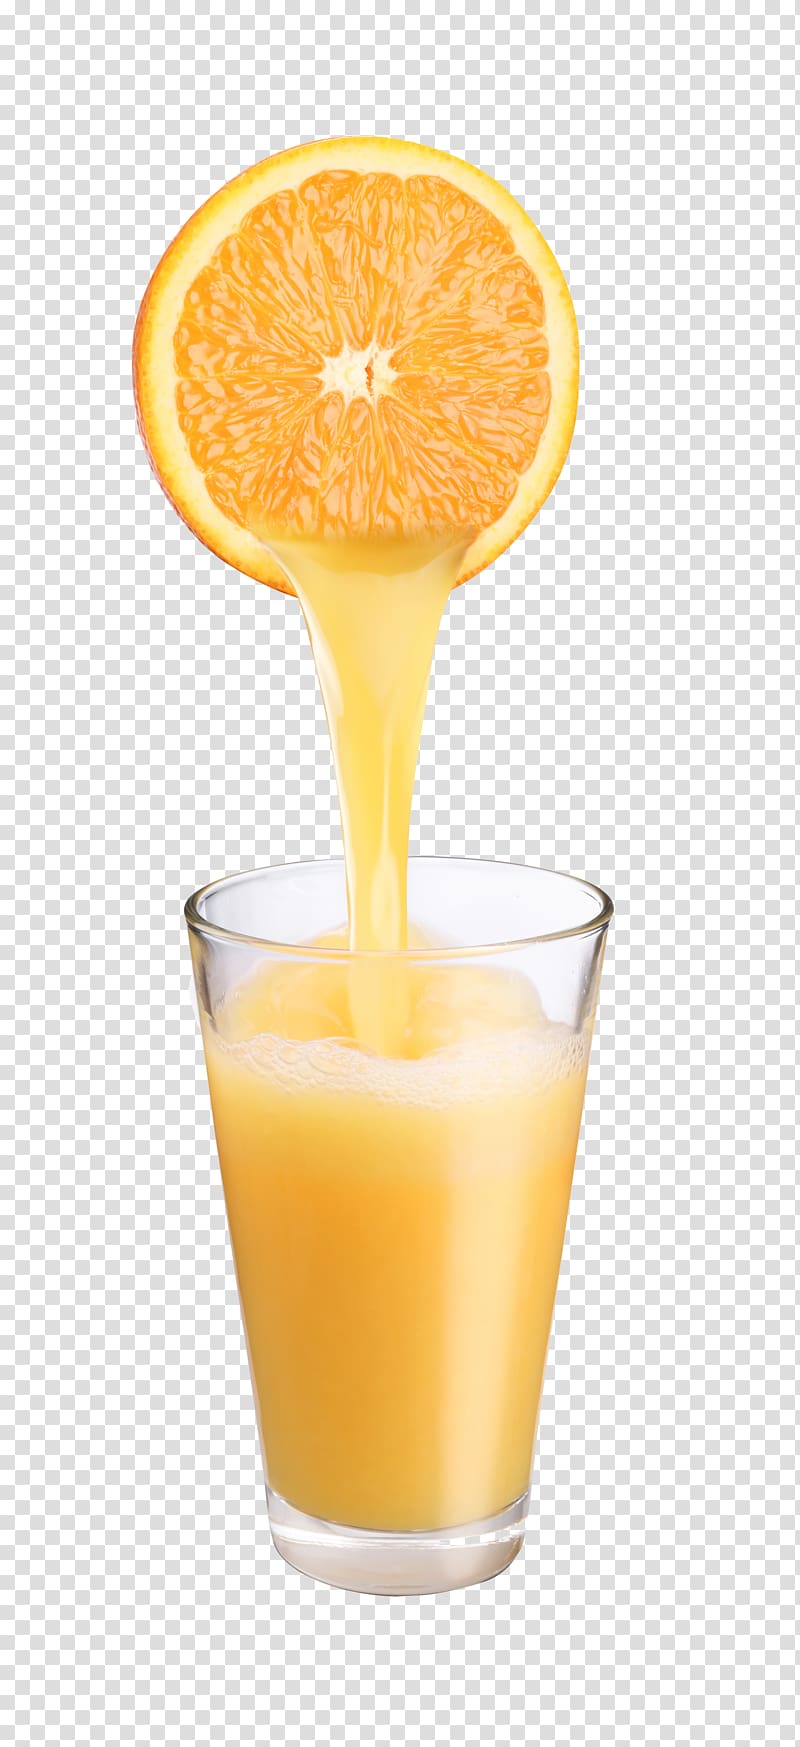 Orange juice Orange drink Grapefruit juice, fruit juice transparent background PNG clipart